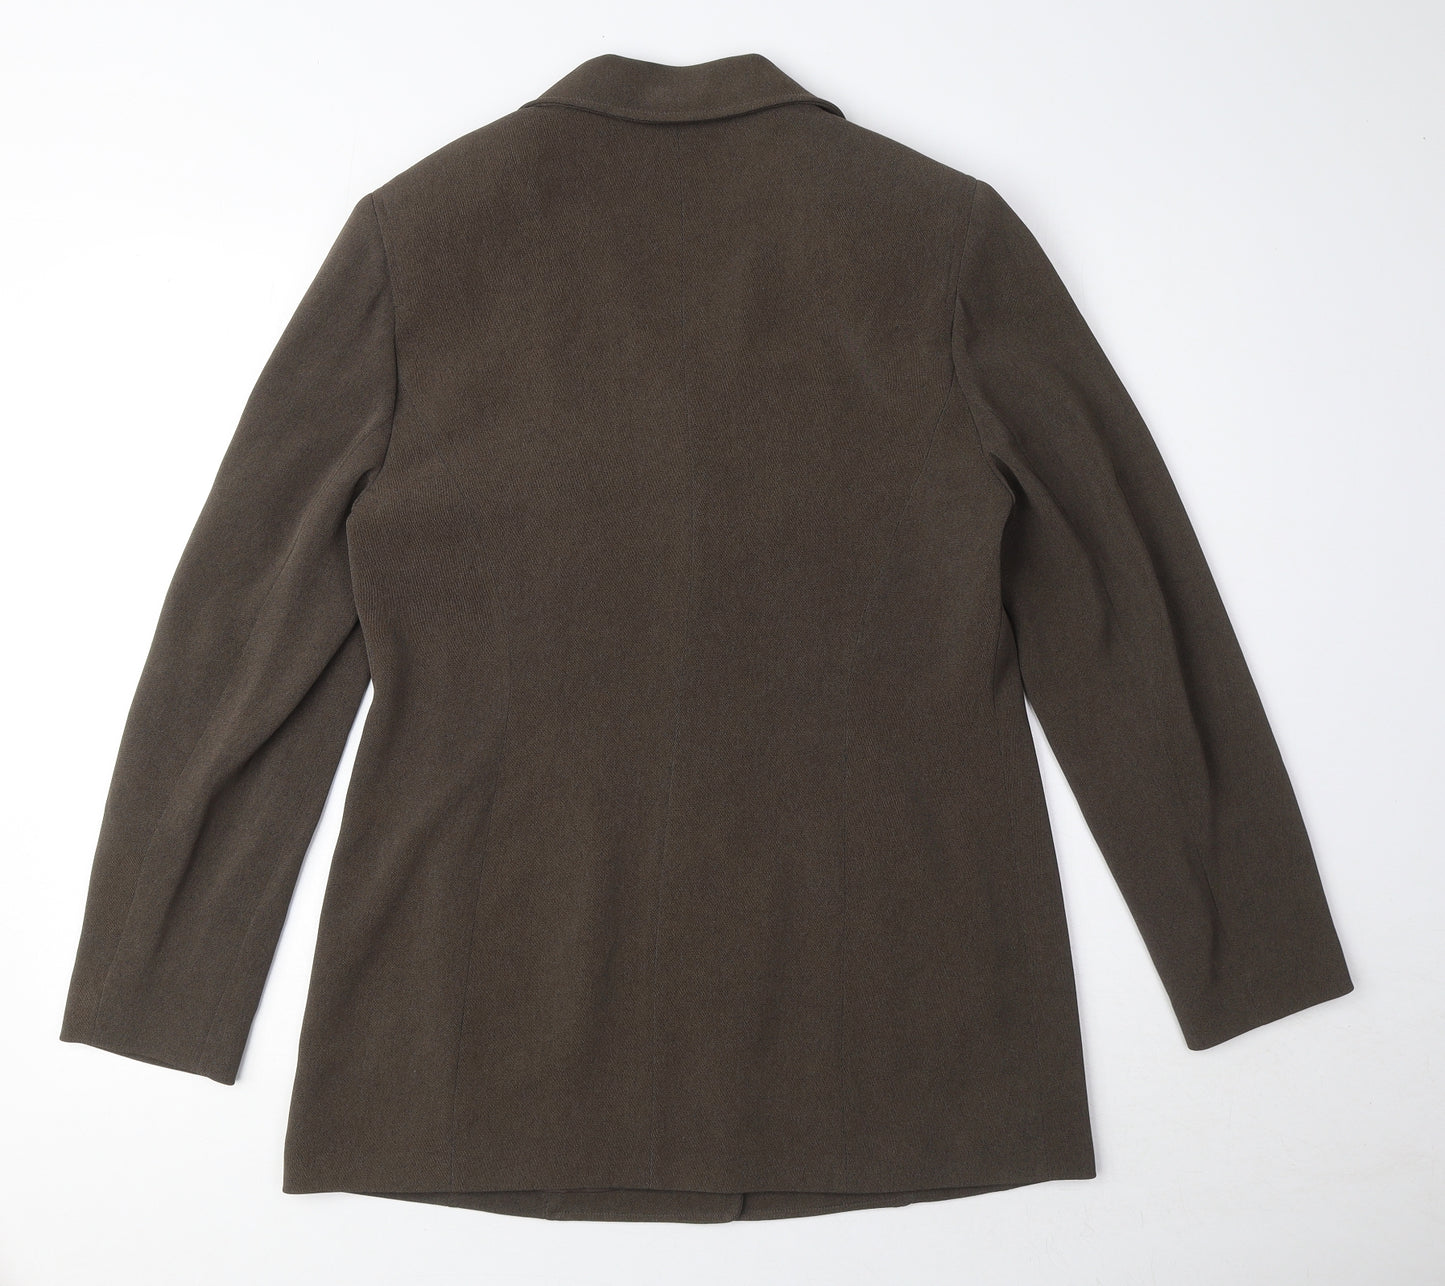 Windsmoor Womens Brown Acetate Jacket Blazer Size 10